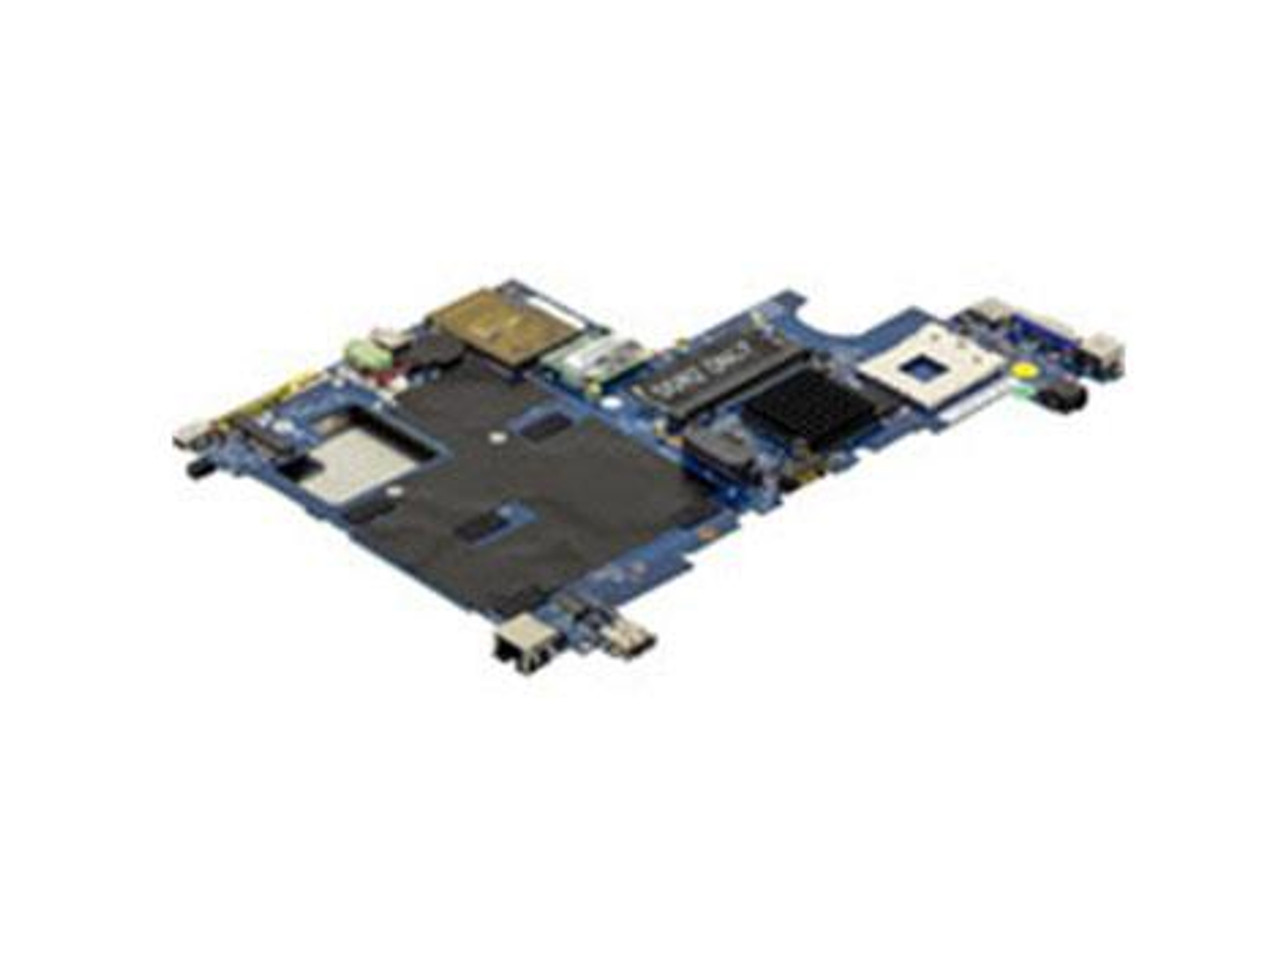 BA92-04355A Samsung System Board (Motherboard) for Q35 (Refurbished)